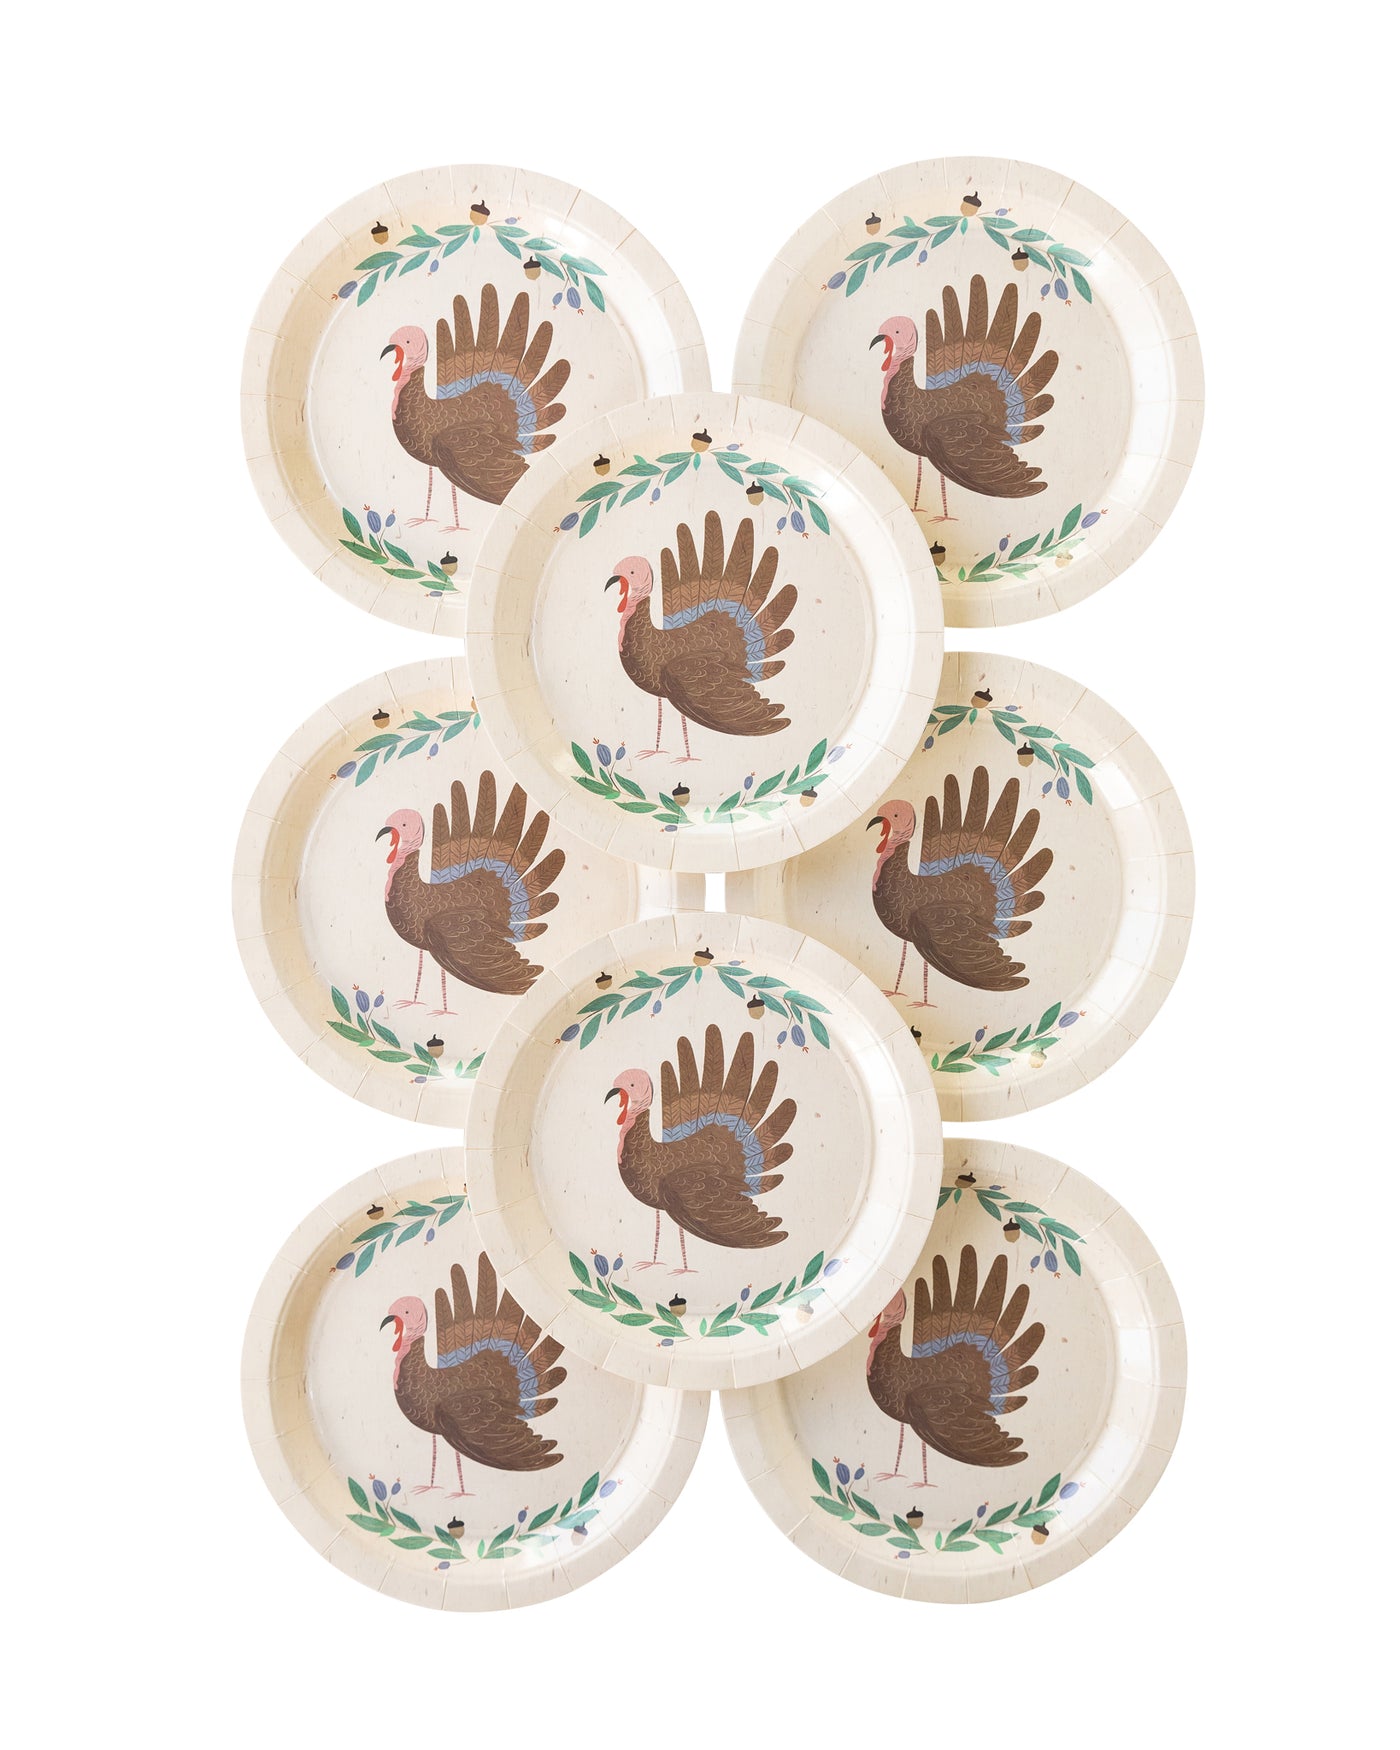 PLTS343B - Painted Turkey Plates